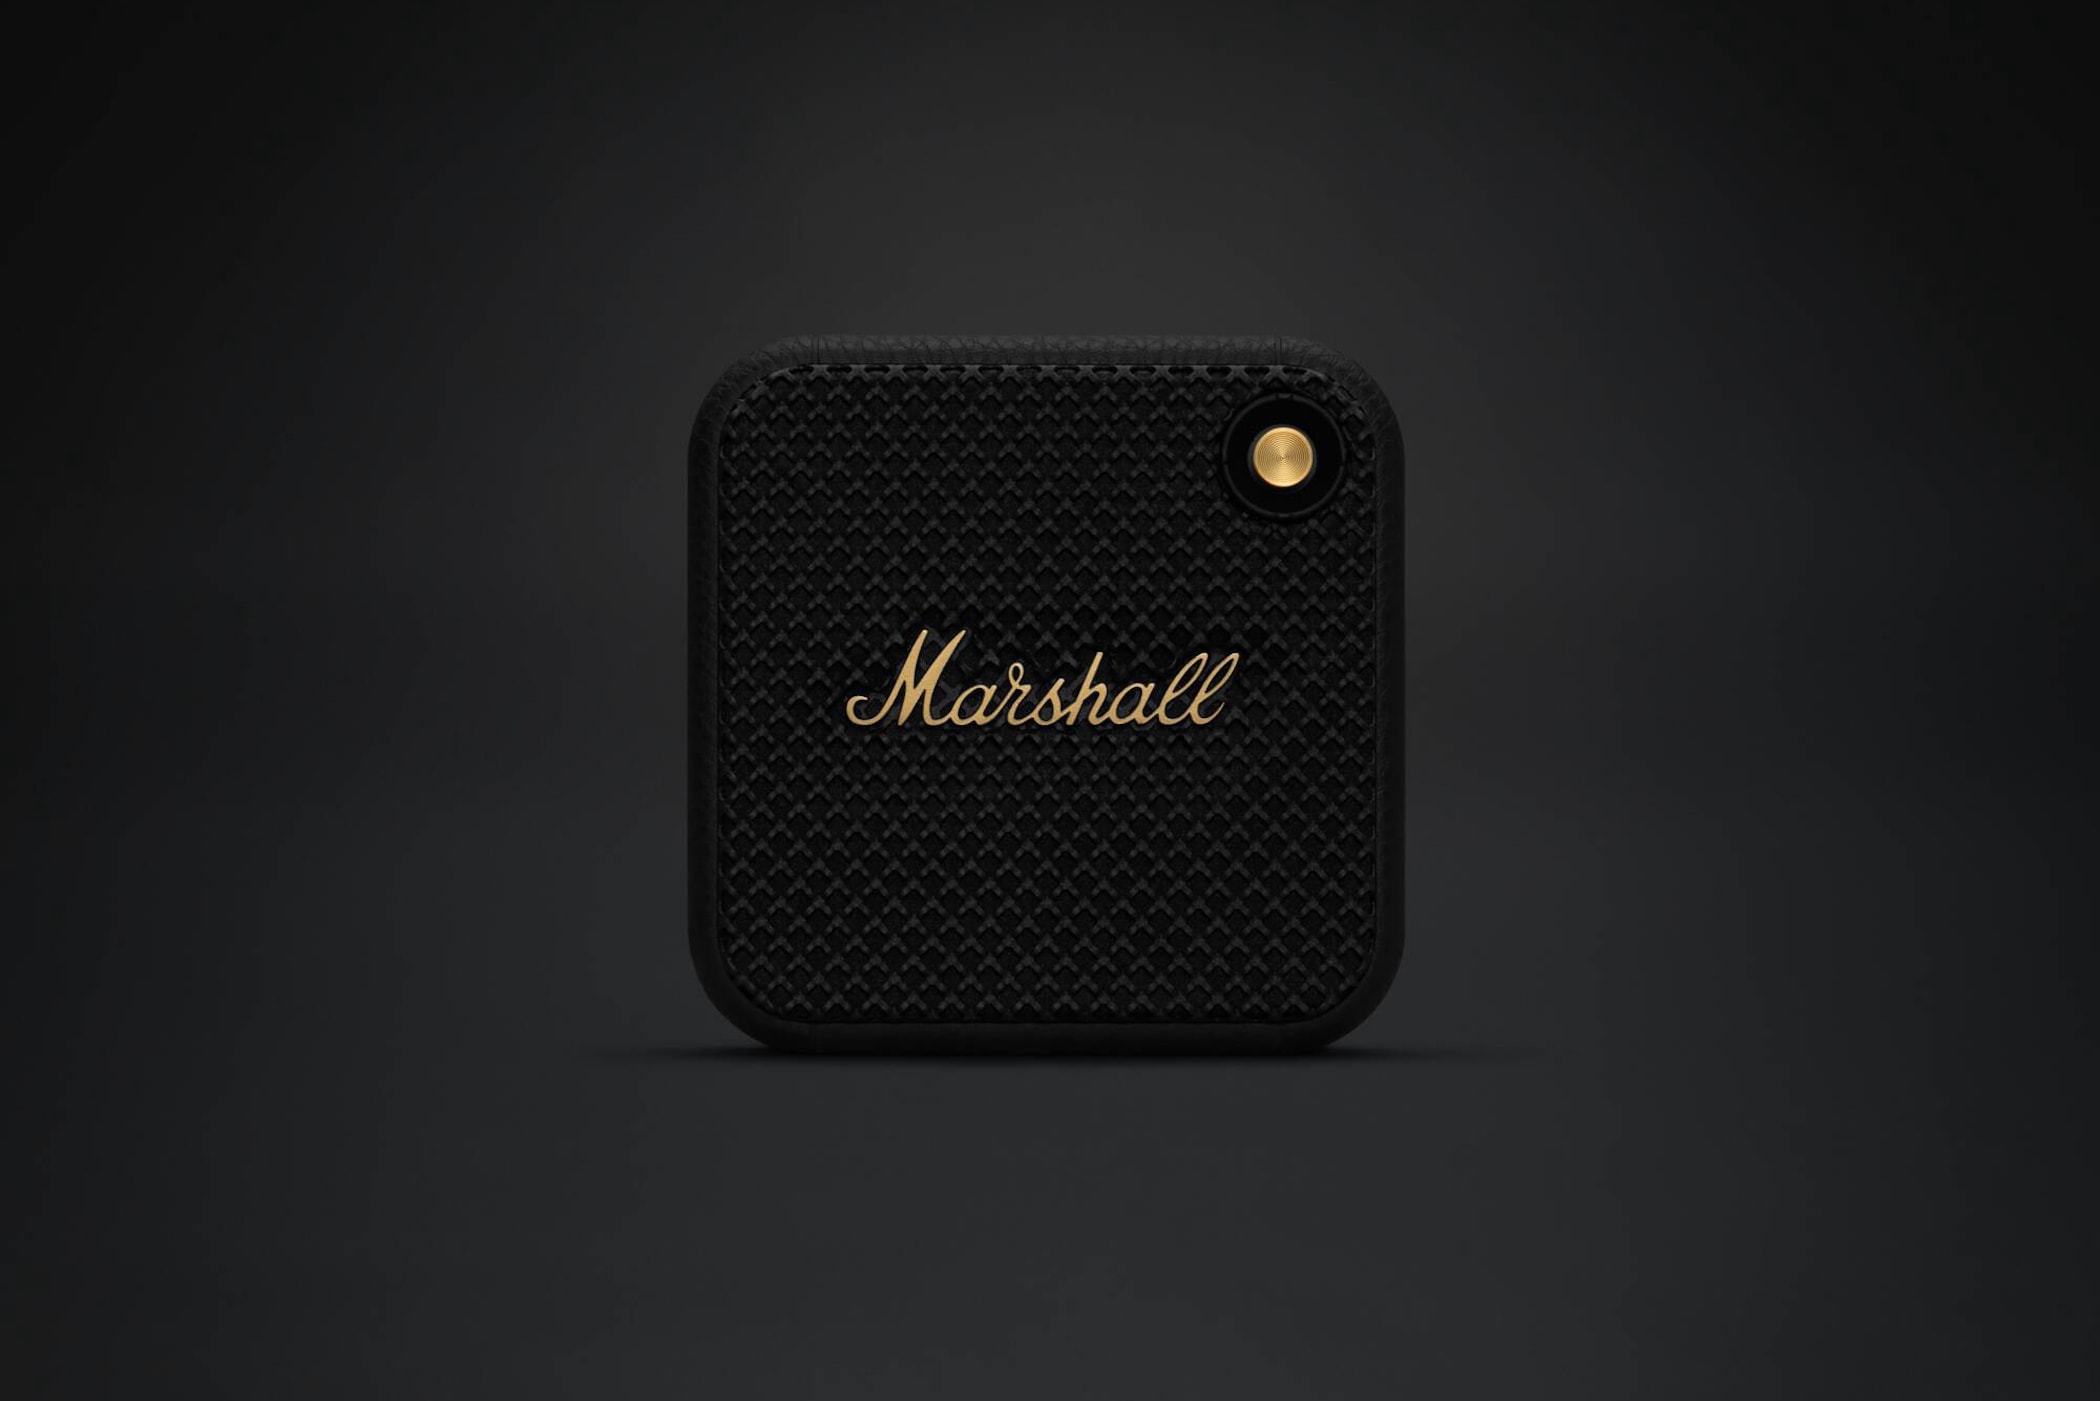 Marshall 推出全新 Willen 便携式音箱